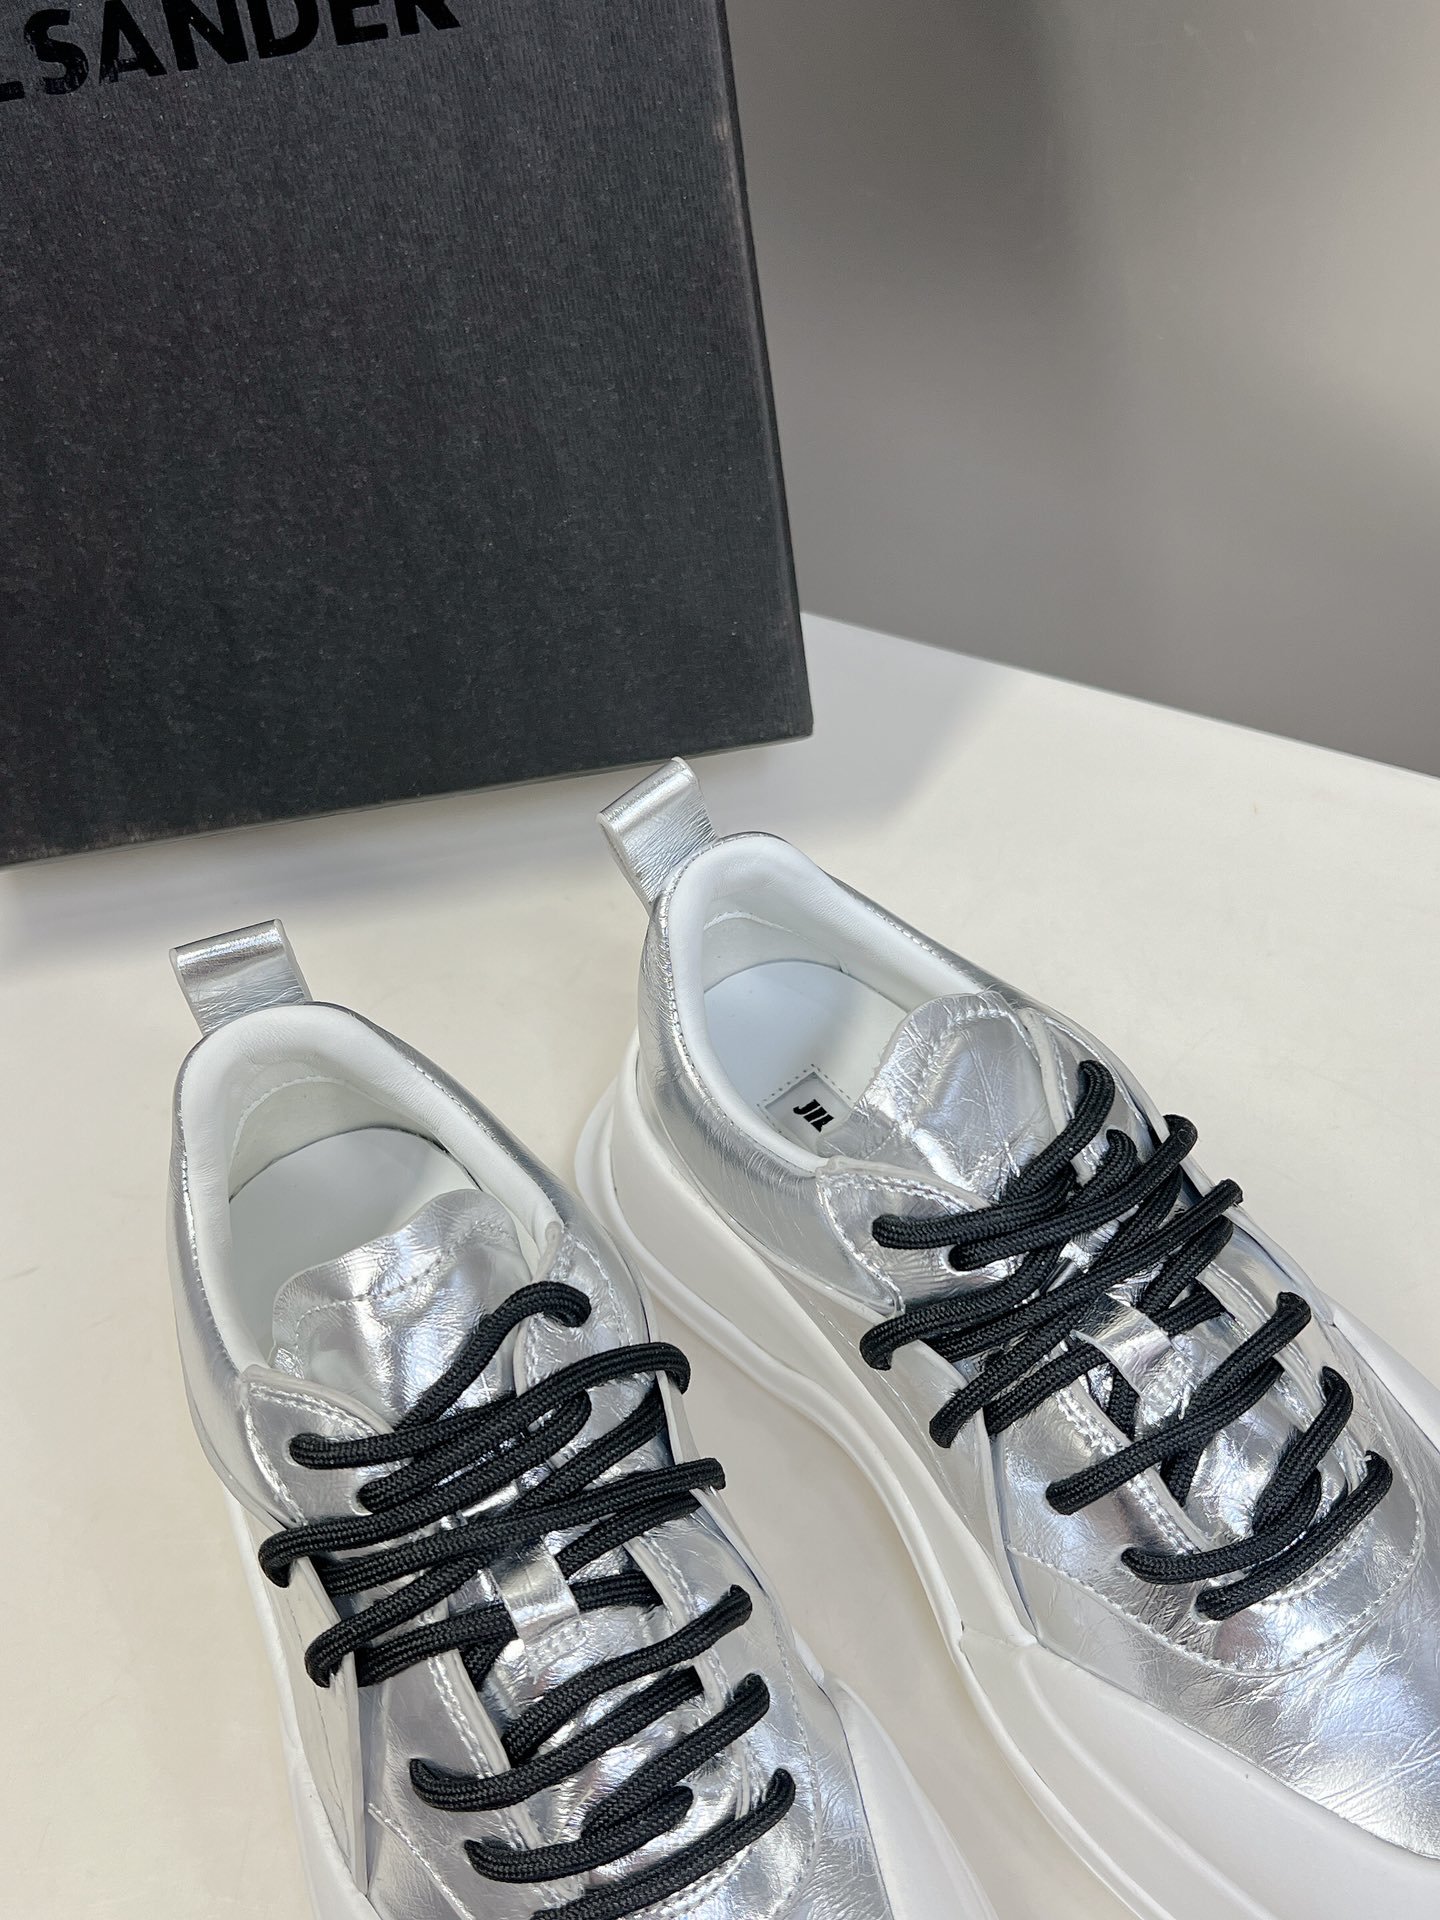 JilSander吉尔桑达最新休闲运动鞋款吉尔在创意总监Lucie和LukeMeier的掌舵下为经典鞋类